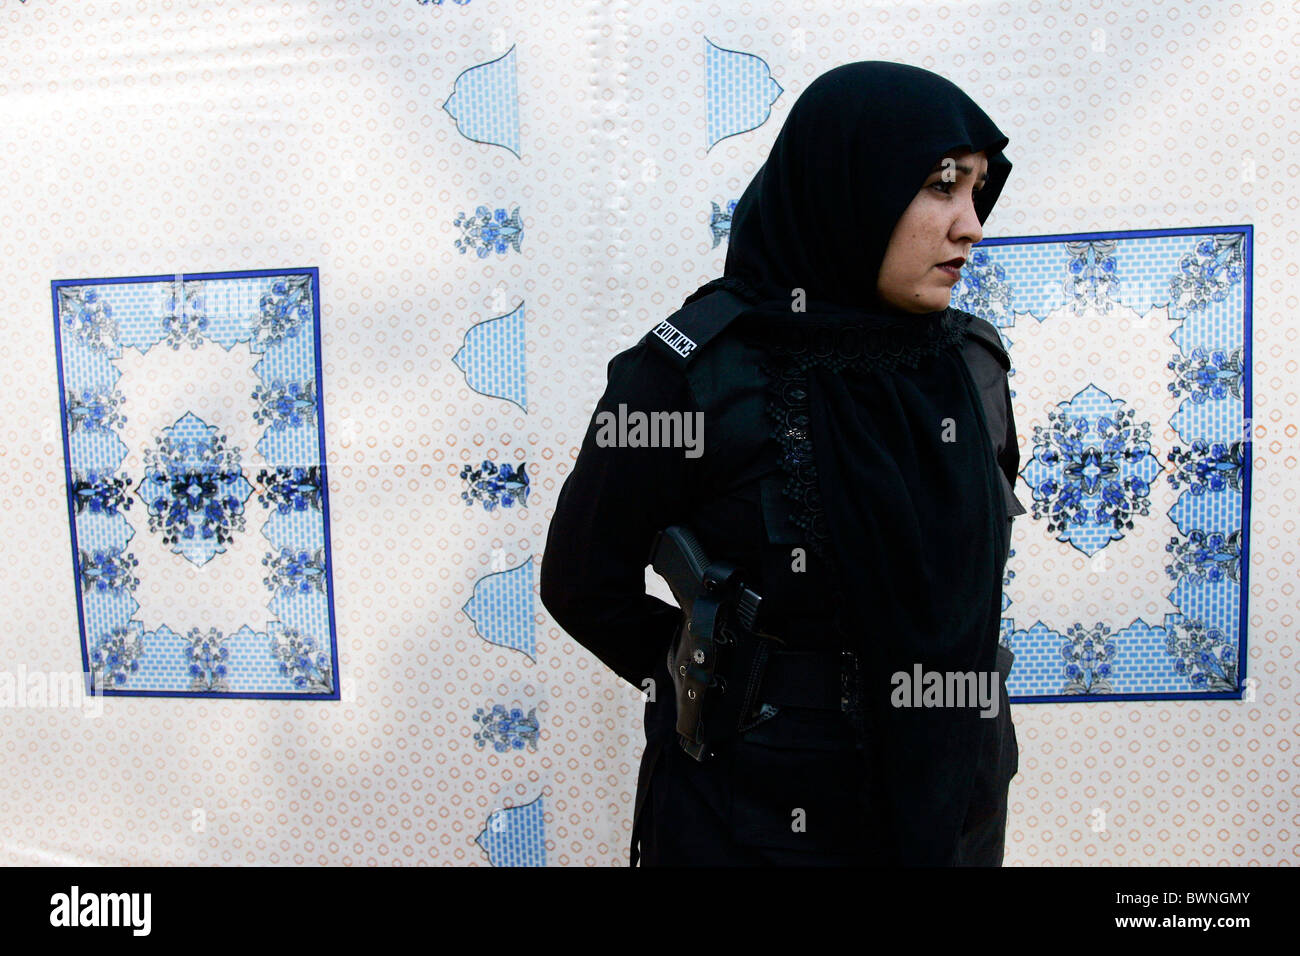 Police security at the all female Fatima Jinnah University, Pakistan Stock Photo